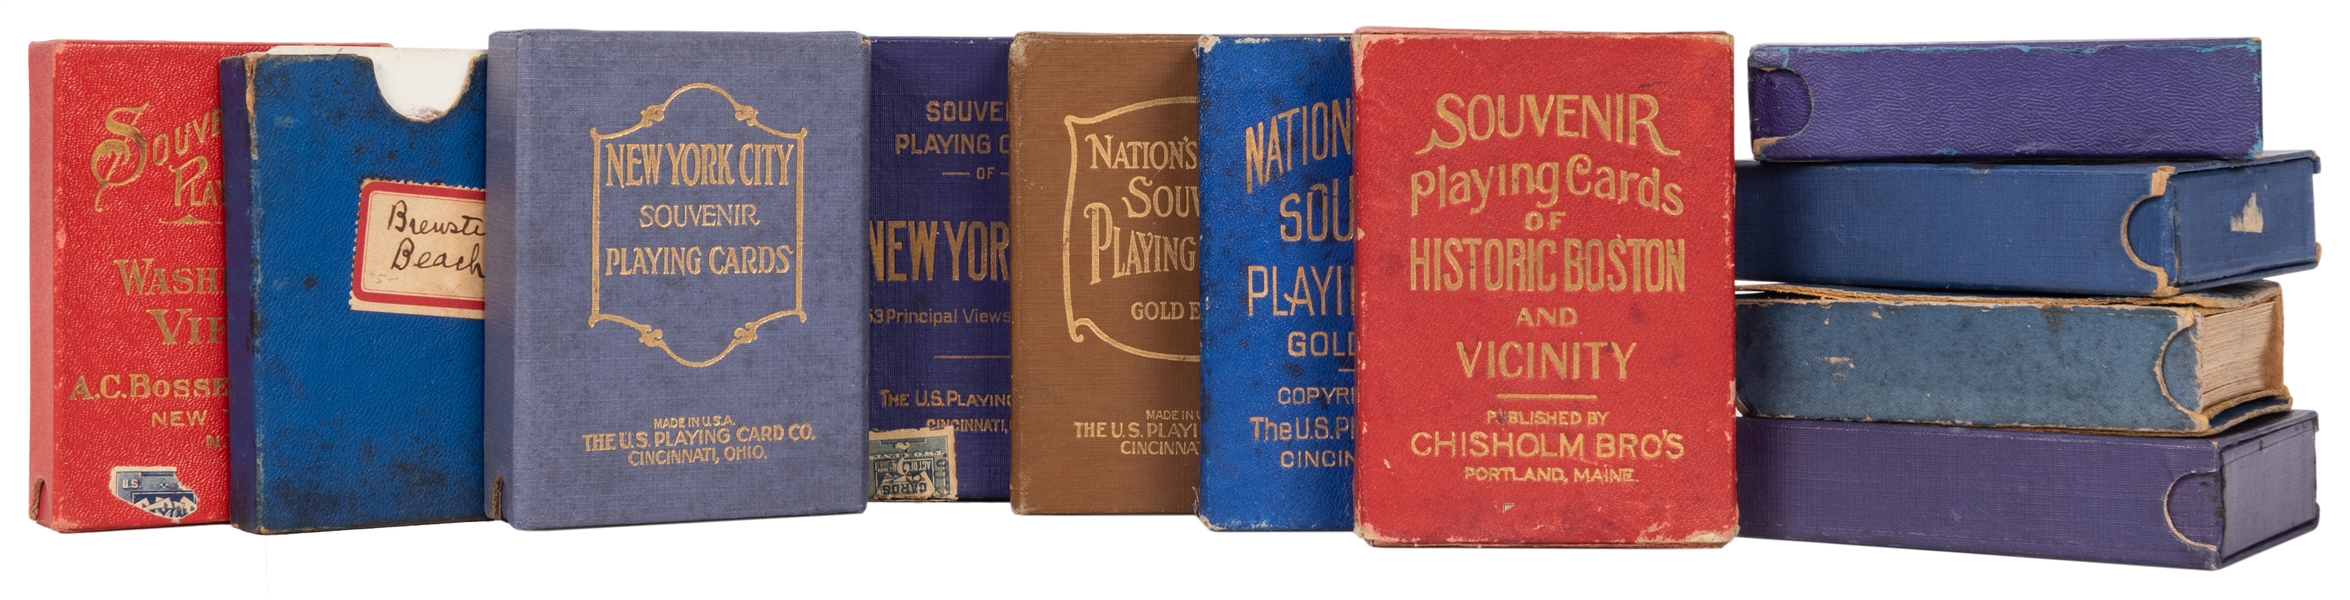 Lot of American Travel Souvenir Playing Card Decks. Boston, New York, and Washington, D.C.